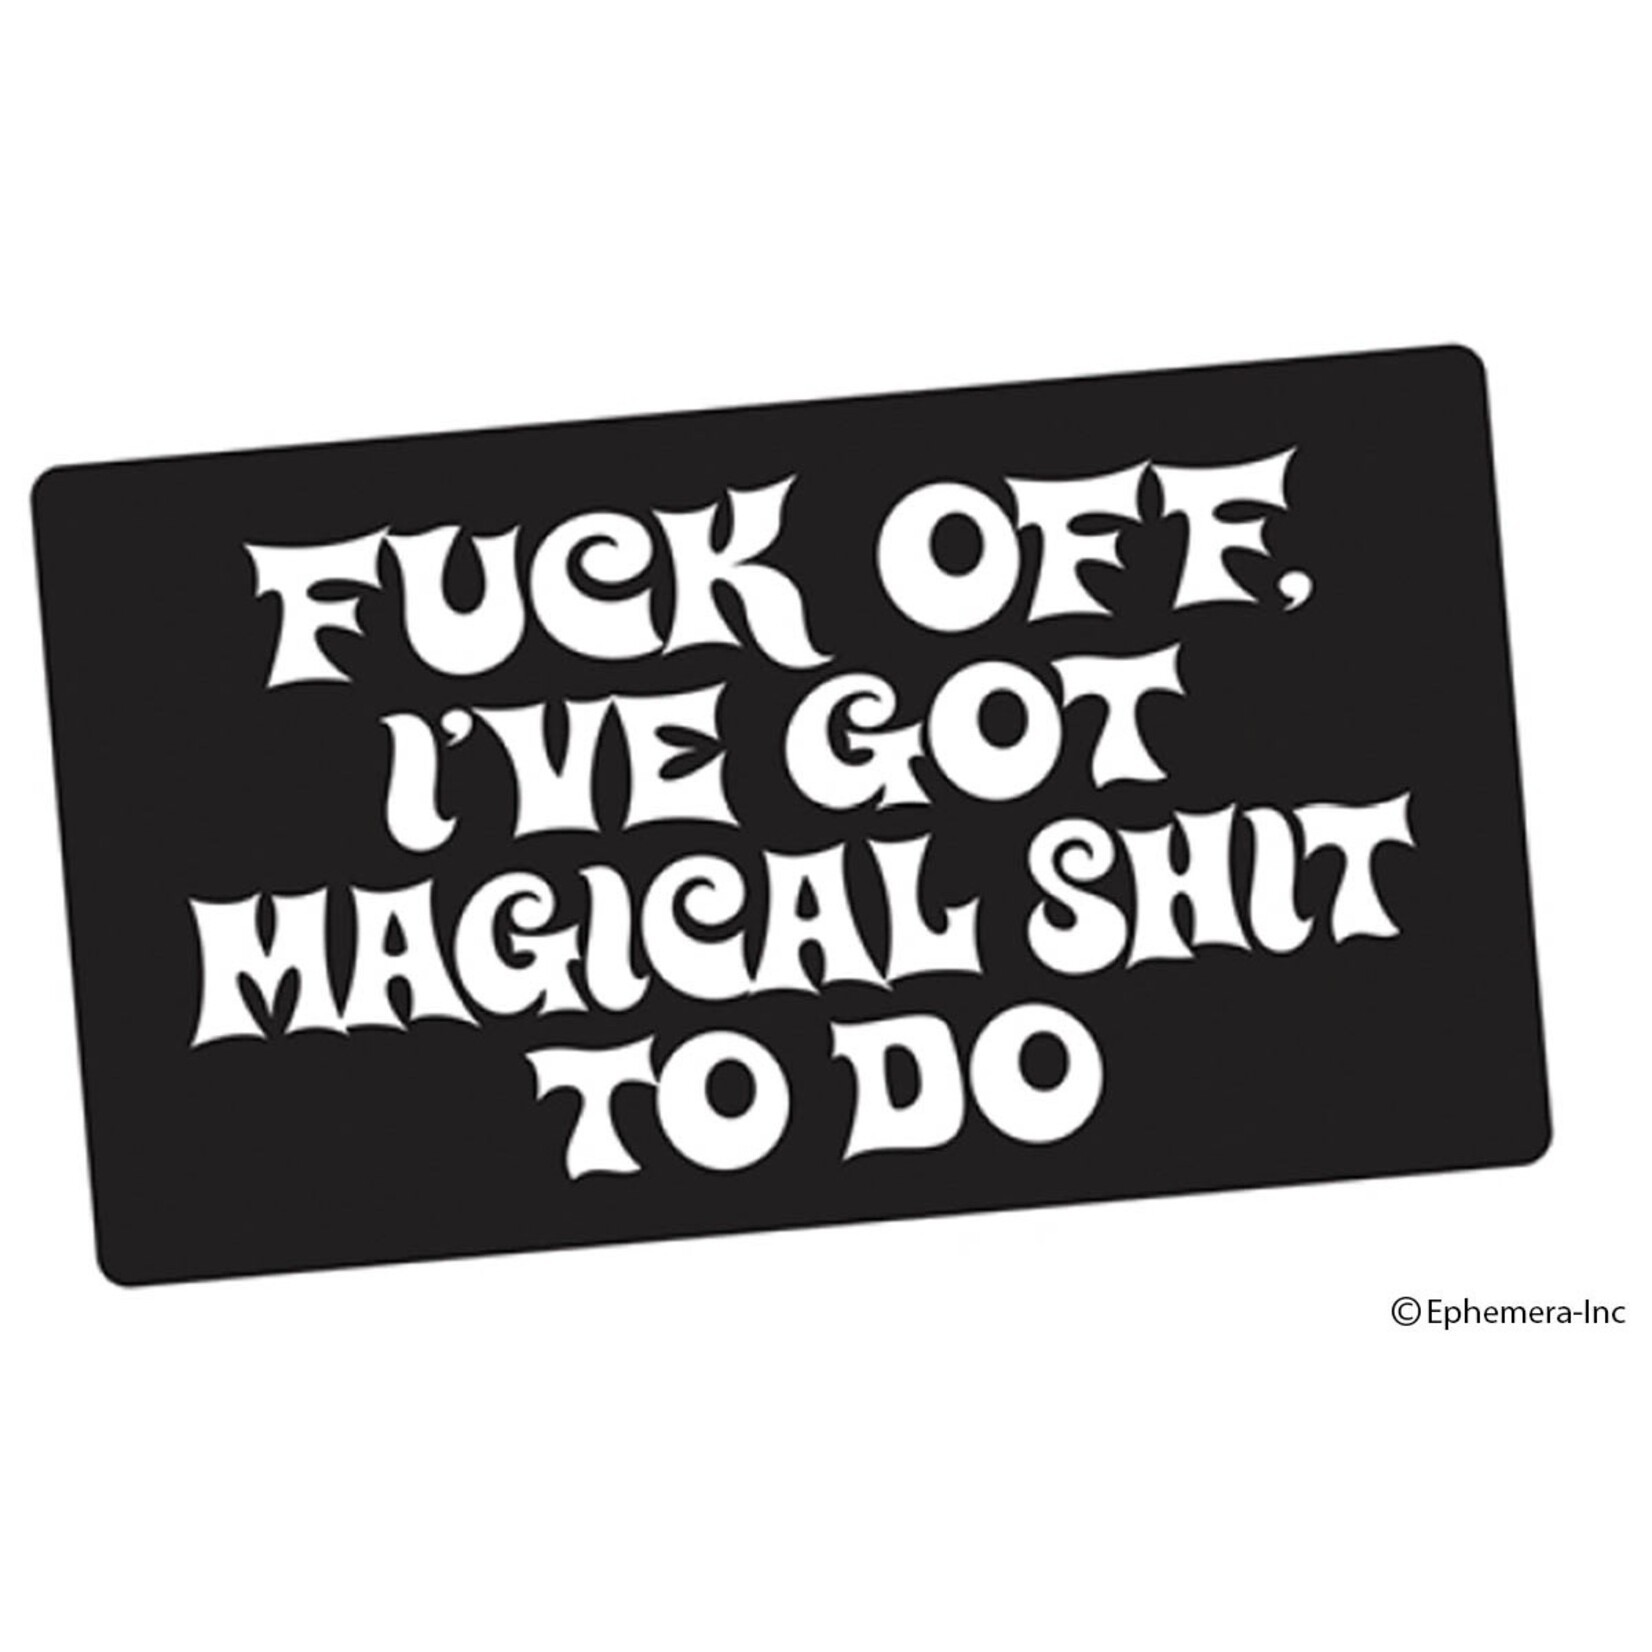 Sticker - Fuck Off, I've Got Magical Shit To Do